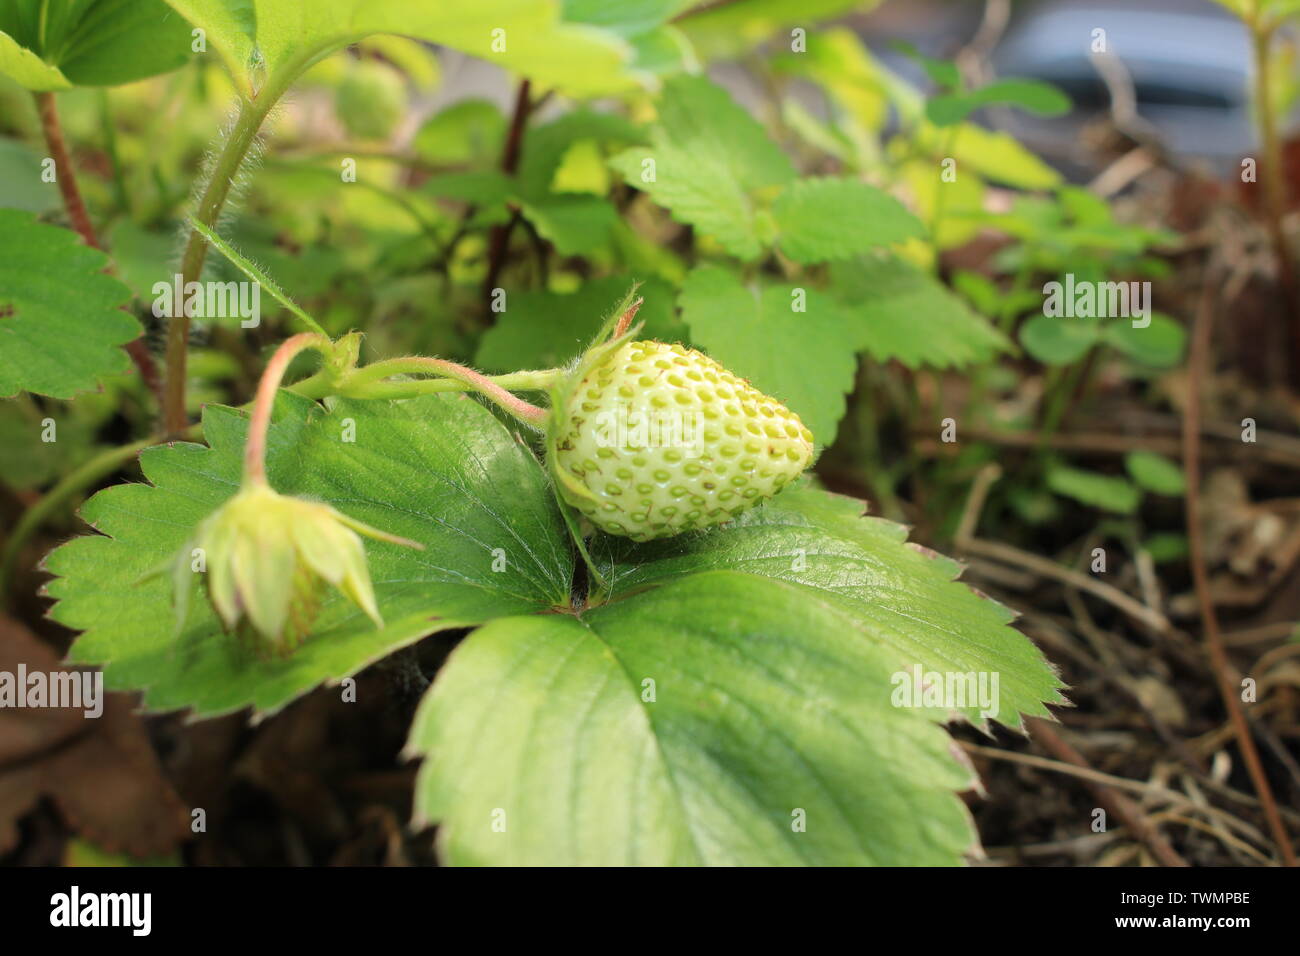 Fragaria Ananassa - Strawbery in green fase Stock Photo